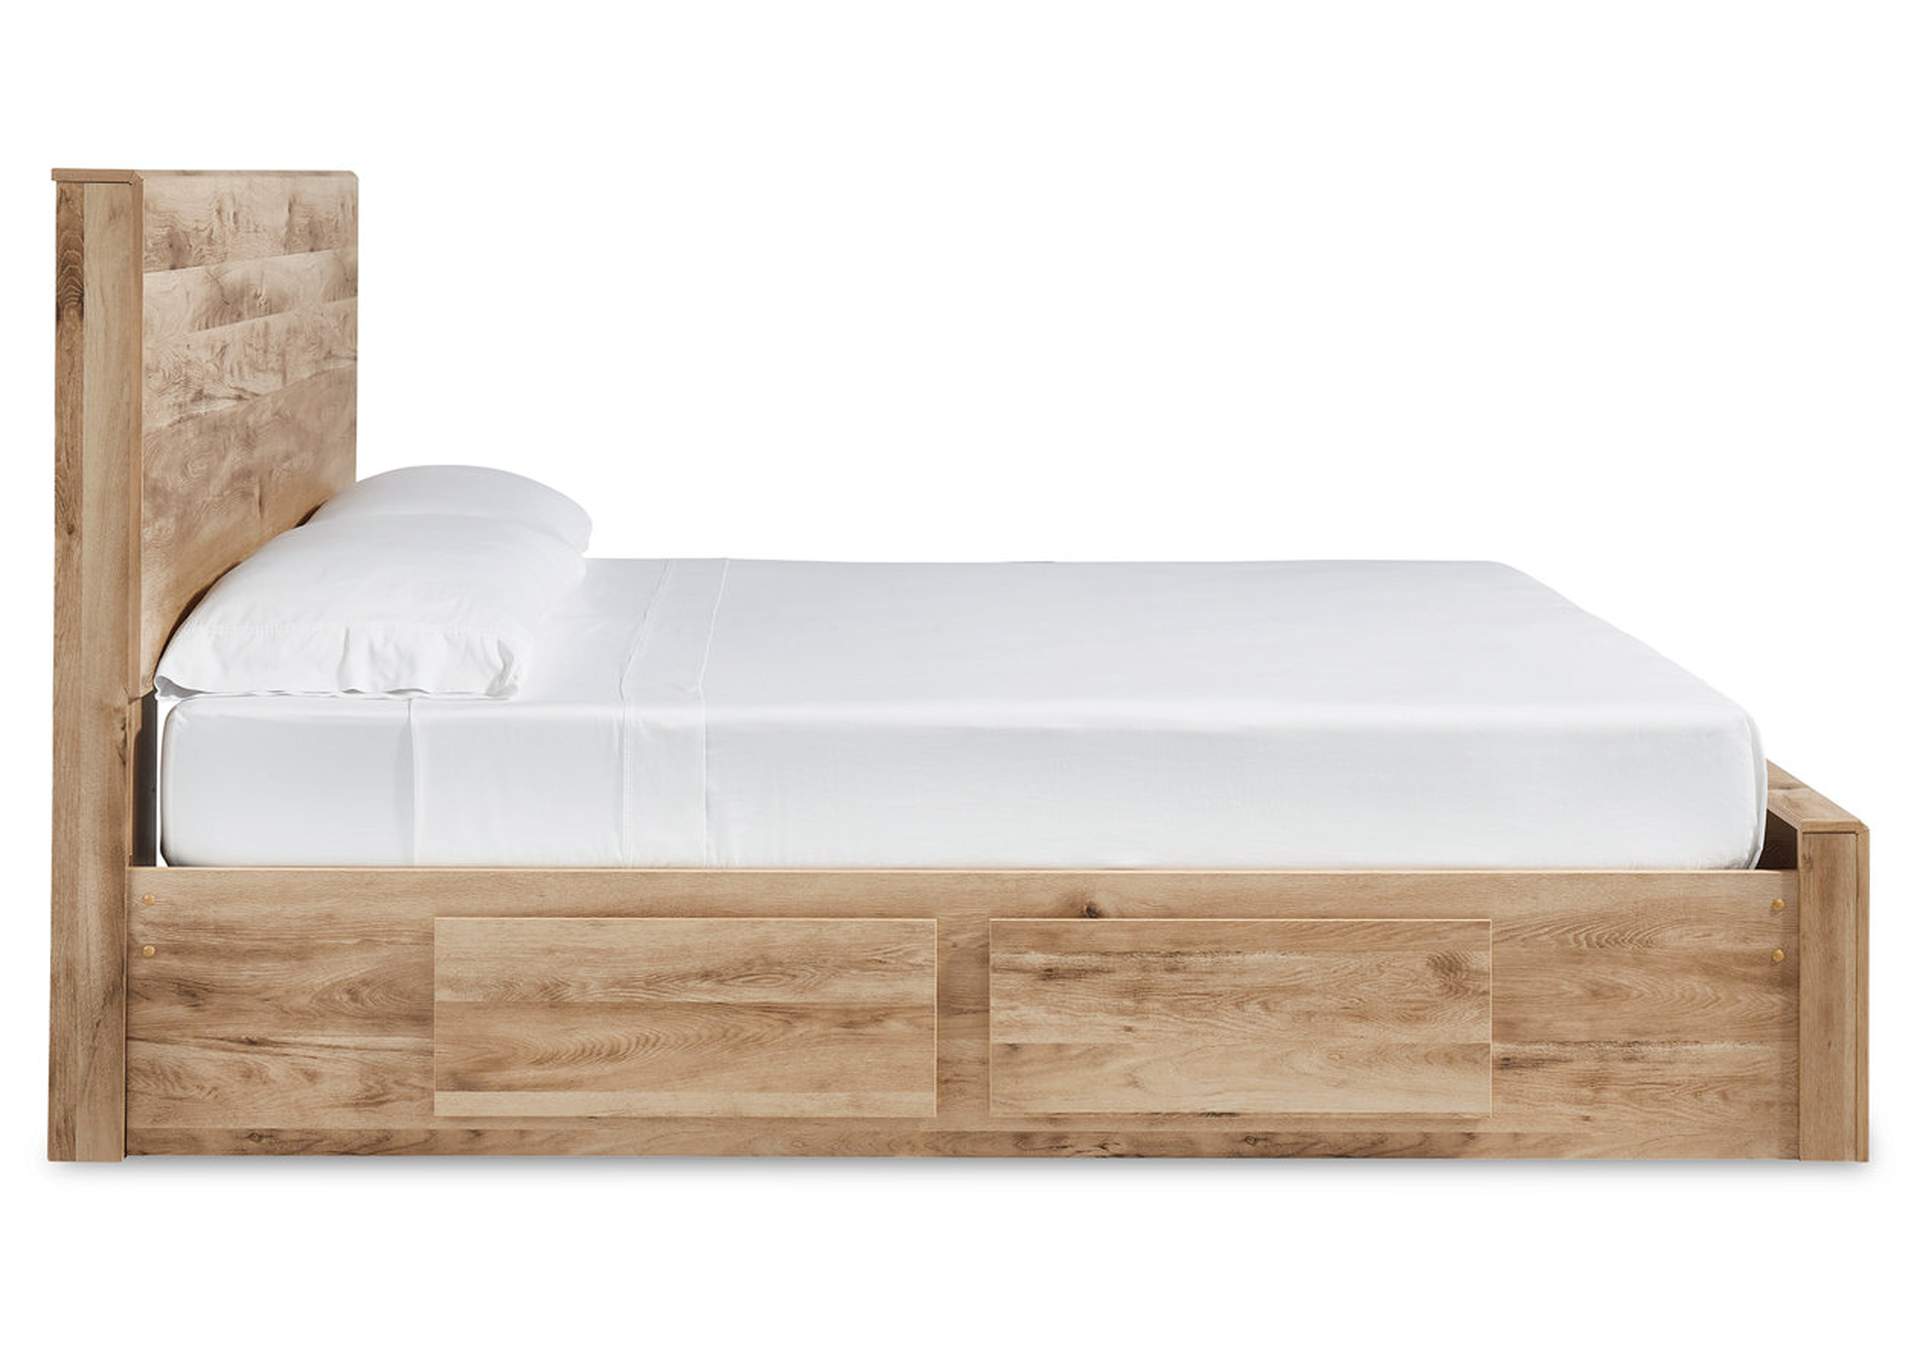 Hyanna Queen Panel Storage Bed with 1 Under Bed Storage Drawer,Signature Design By Ashley